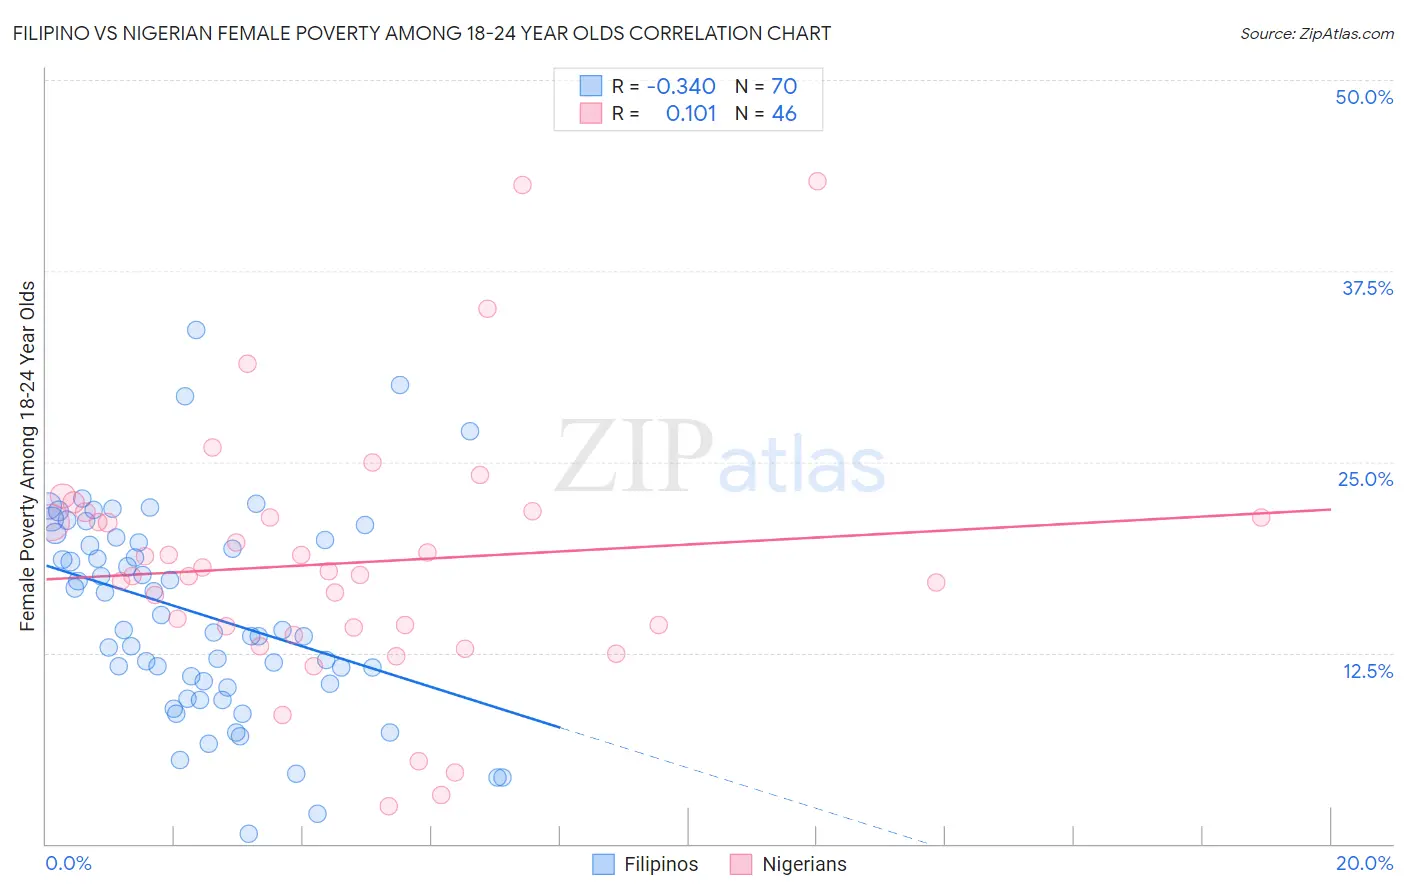 Filipino vs Nigerian Female Poverty Among 18-24 Year Olds